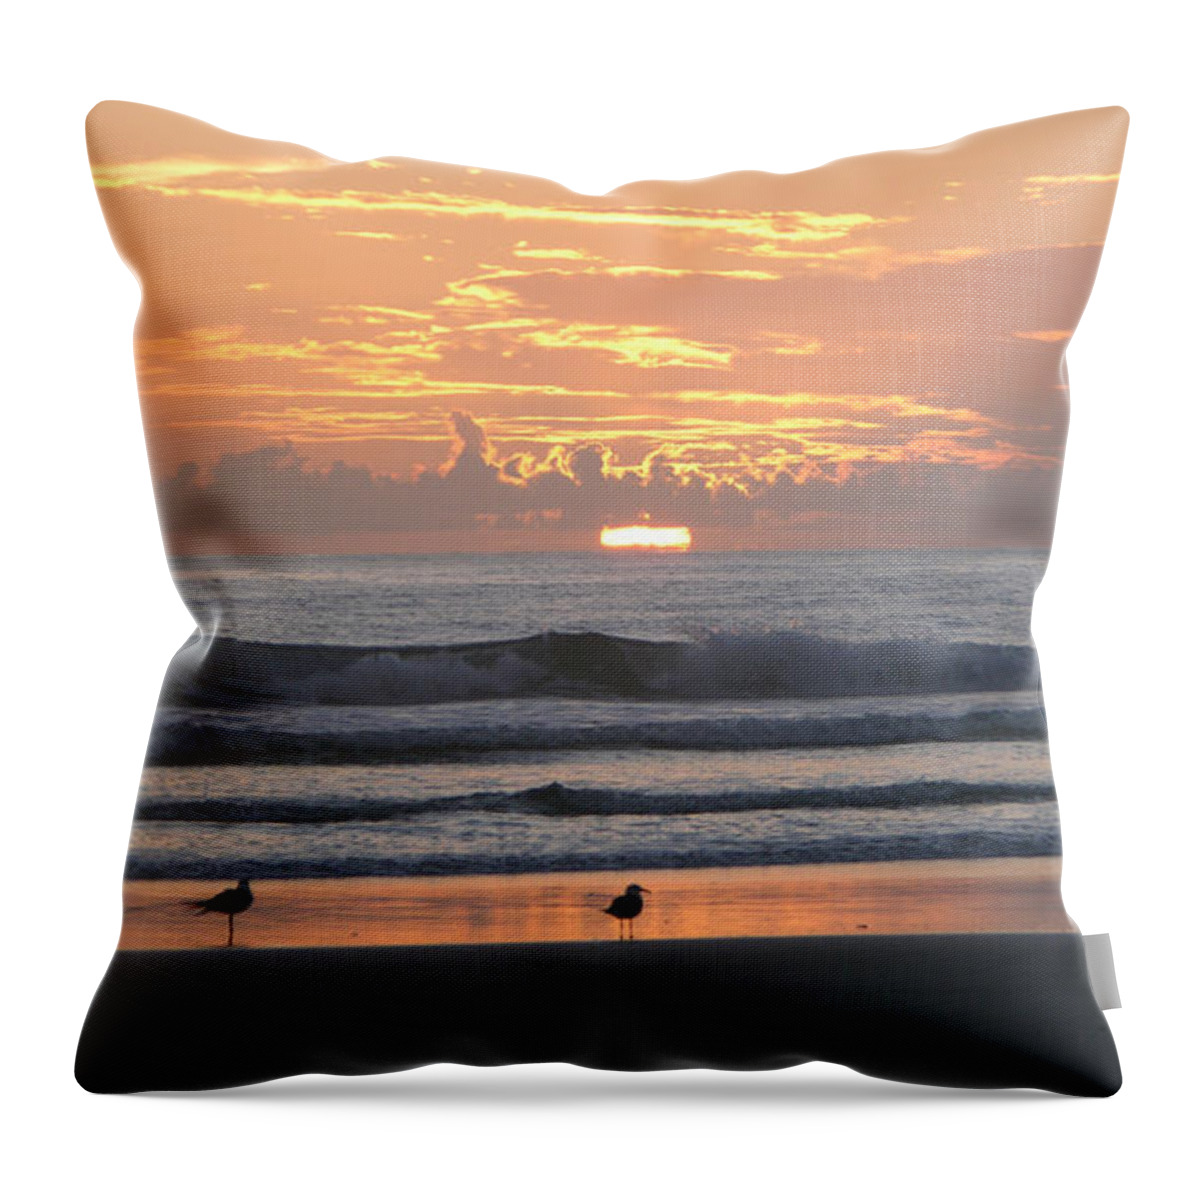 Beautiful Beach Sunrise Photographs Throw Pillow featuring the photograph Pink beach sunrise with seabirds by Julianne Felton